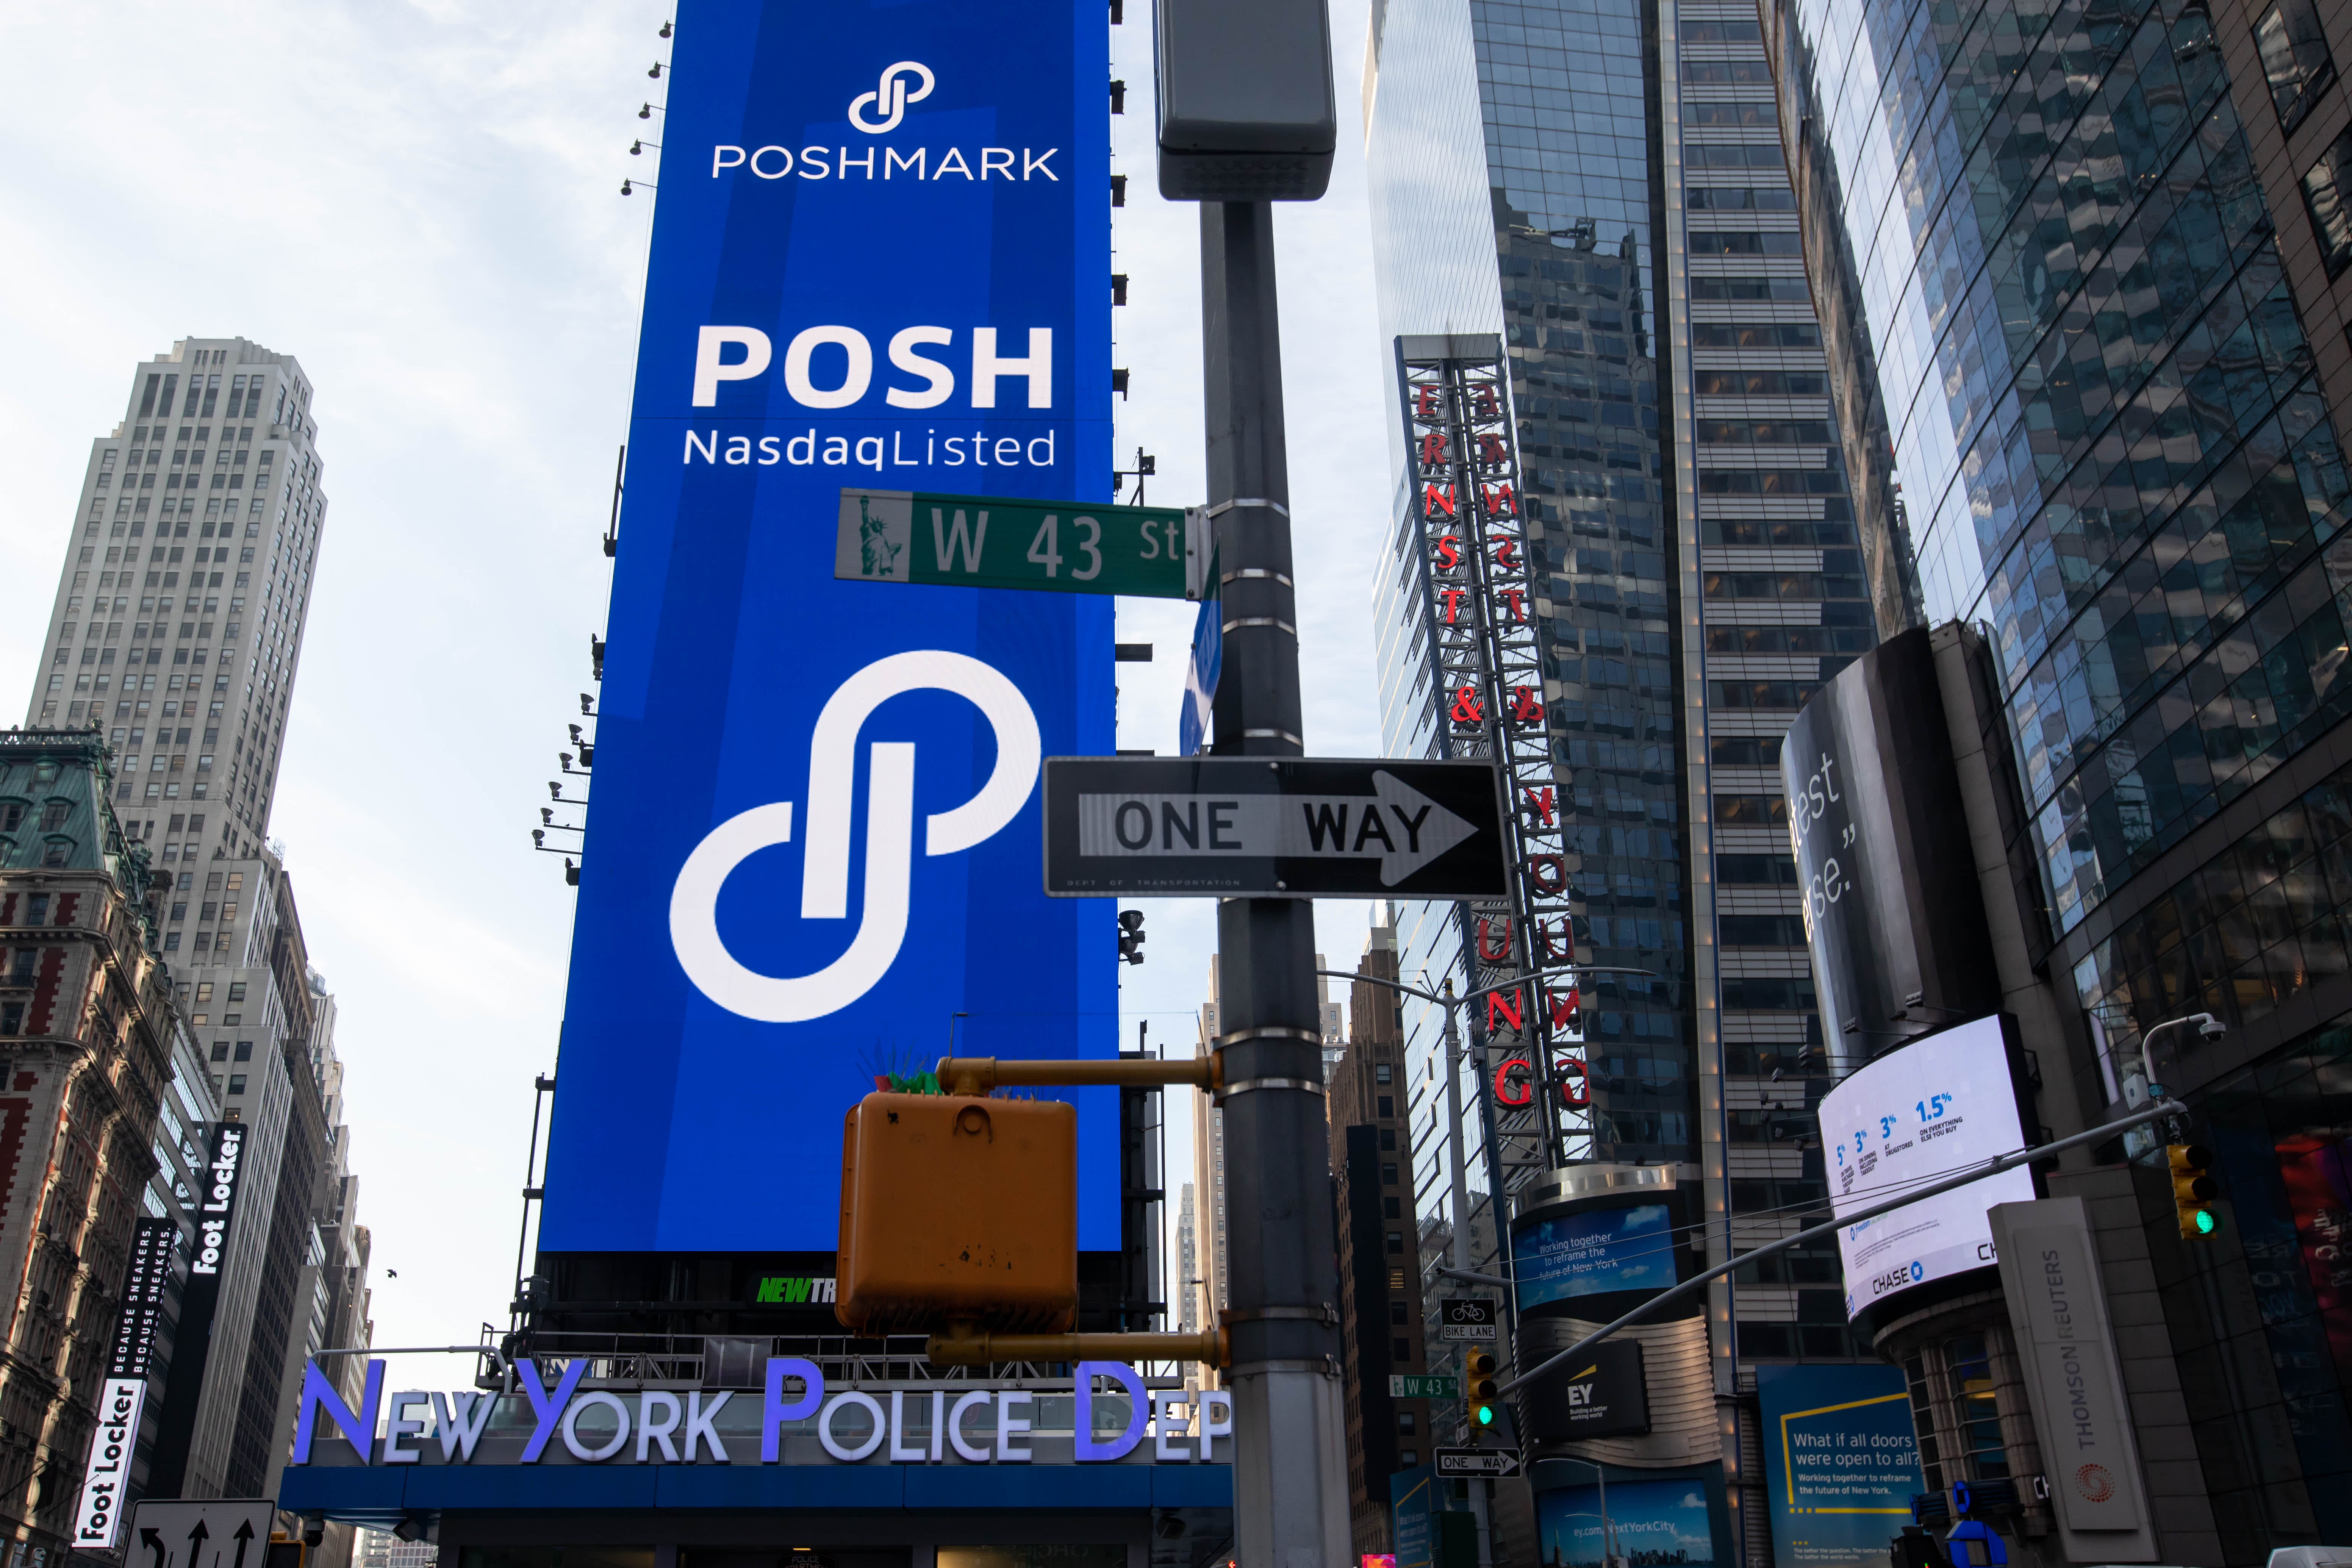 Poshmark (POSH) Q4 2020 earnings, first since IPO